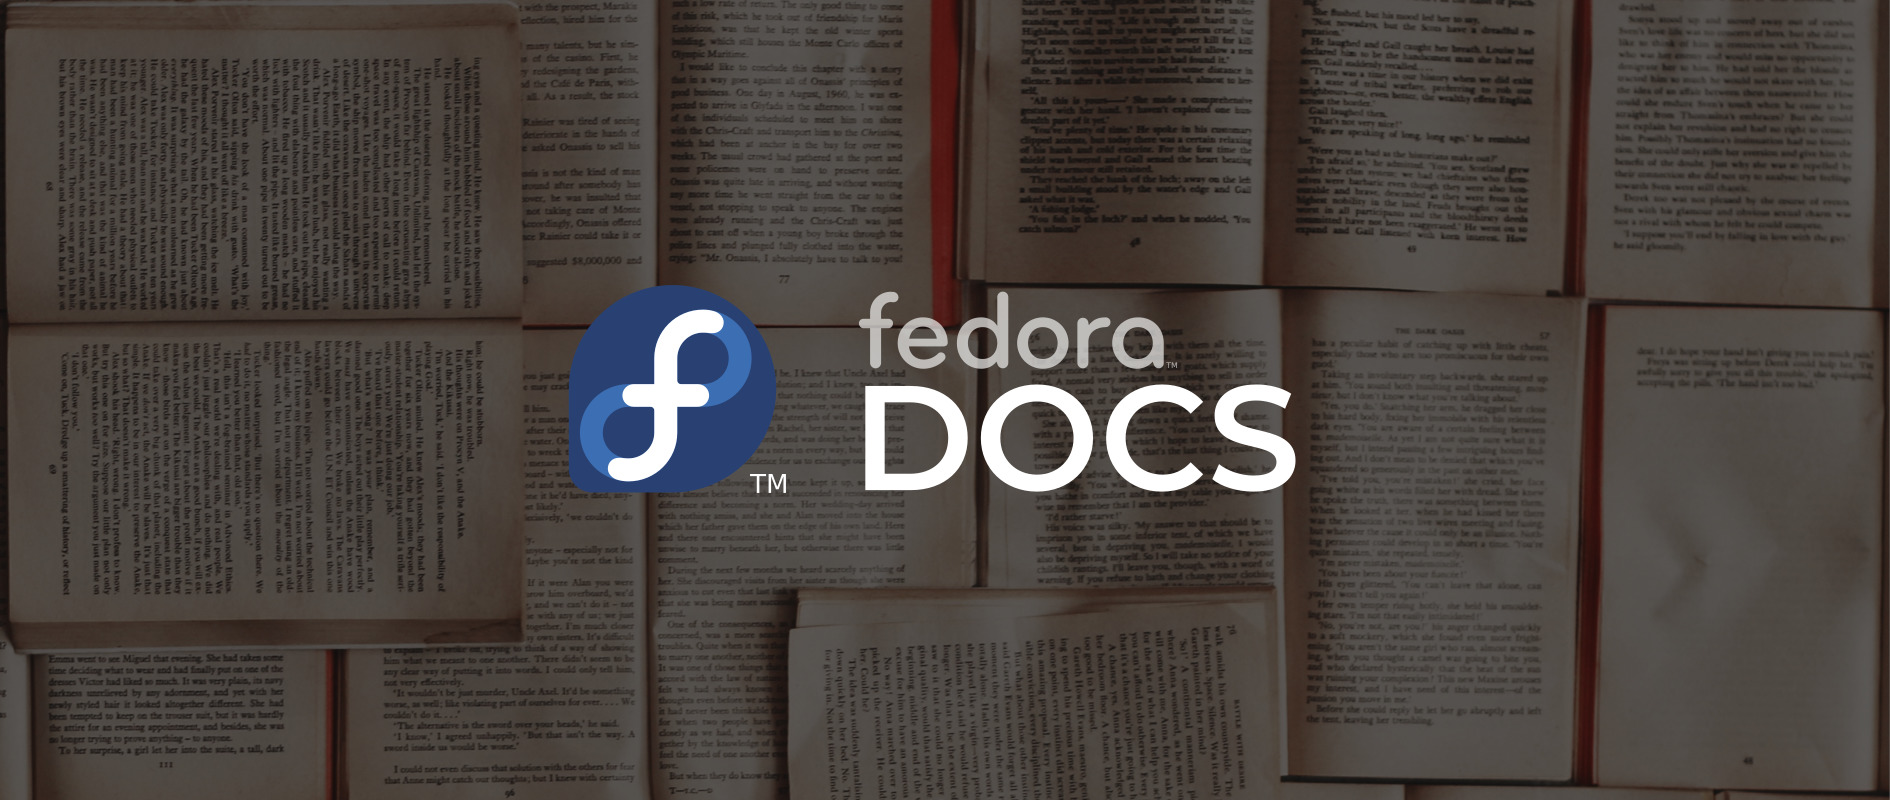 Logo Tim Dokumentasi Fedora dengan Merk Dagang Fedora; halaman-halaman buku di latar belakang.